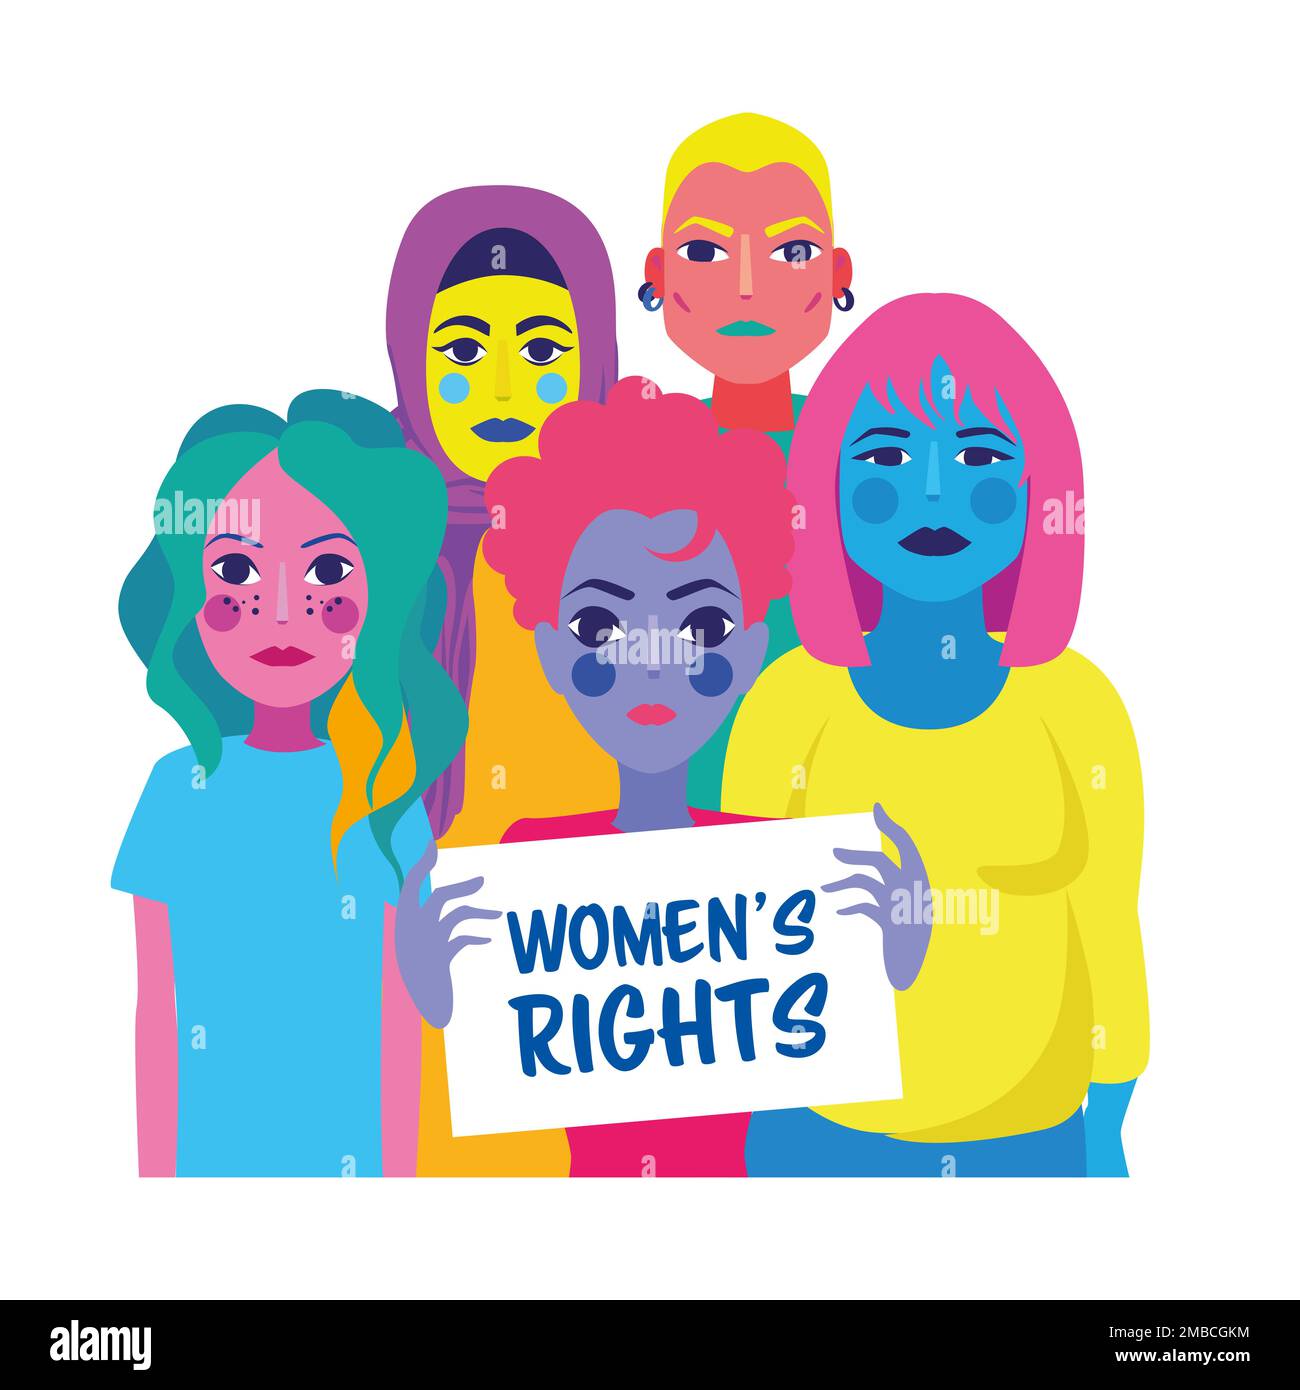 Women s rights illustration - inclusive design banner theme Stock Photo